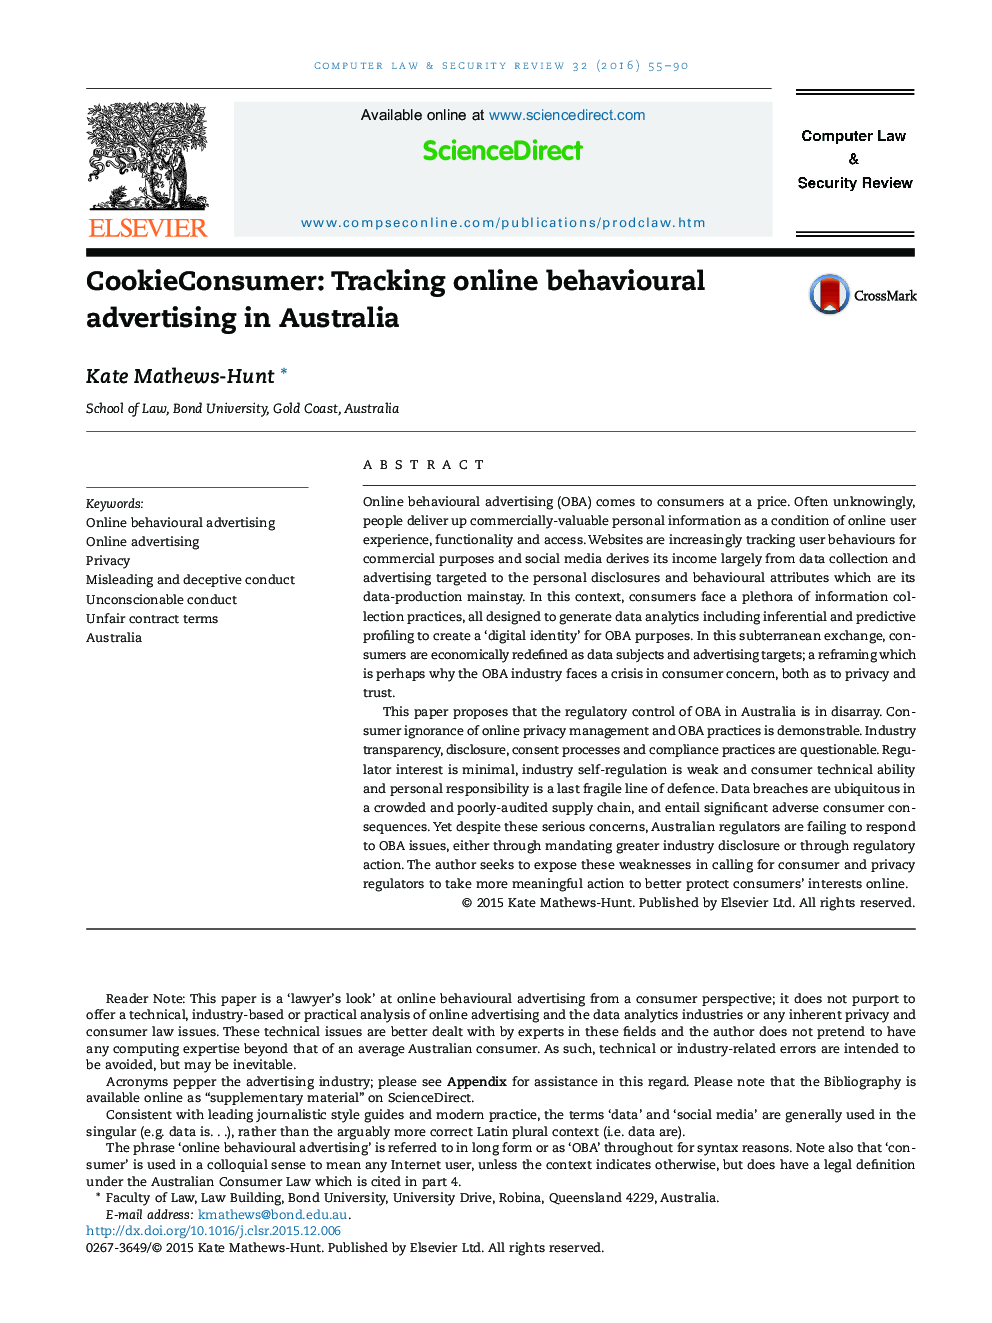 CookieConsumer: Tracking online behavioural advertising in Australia 